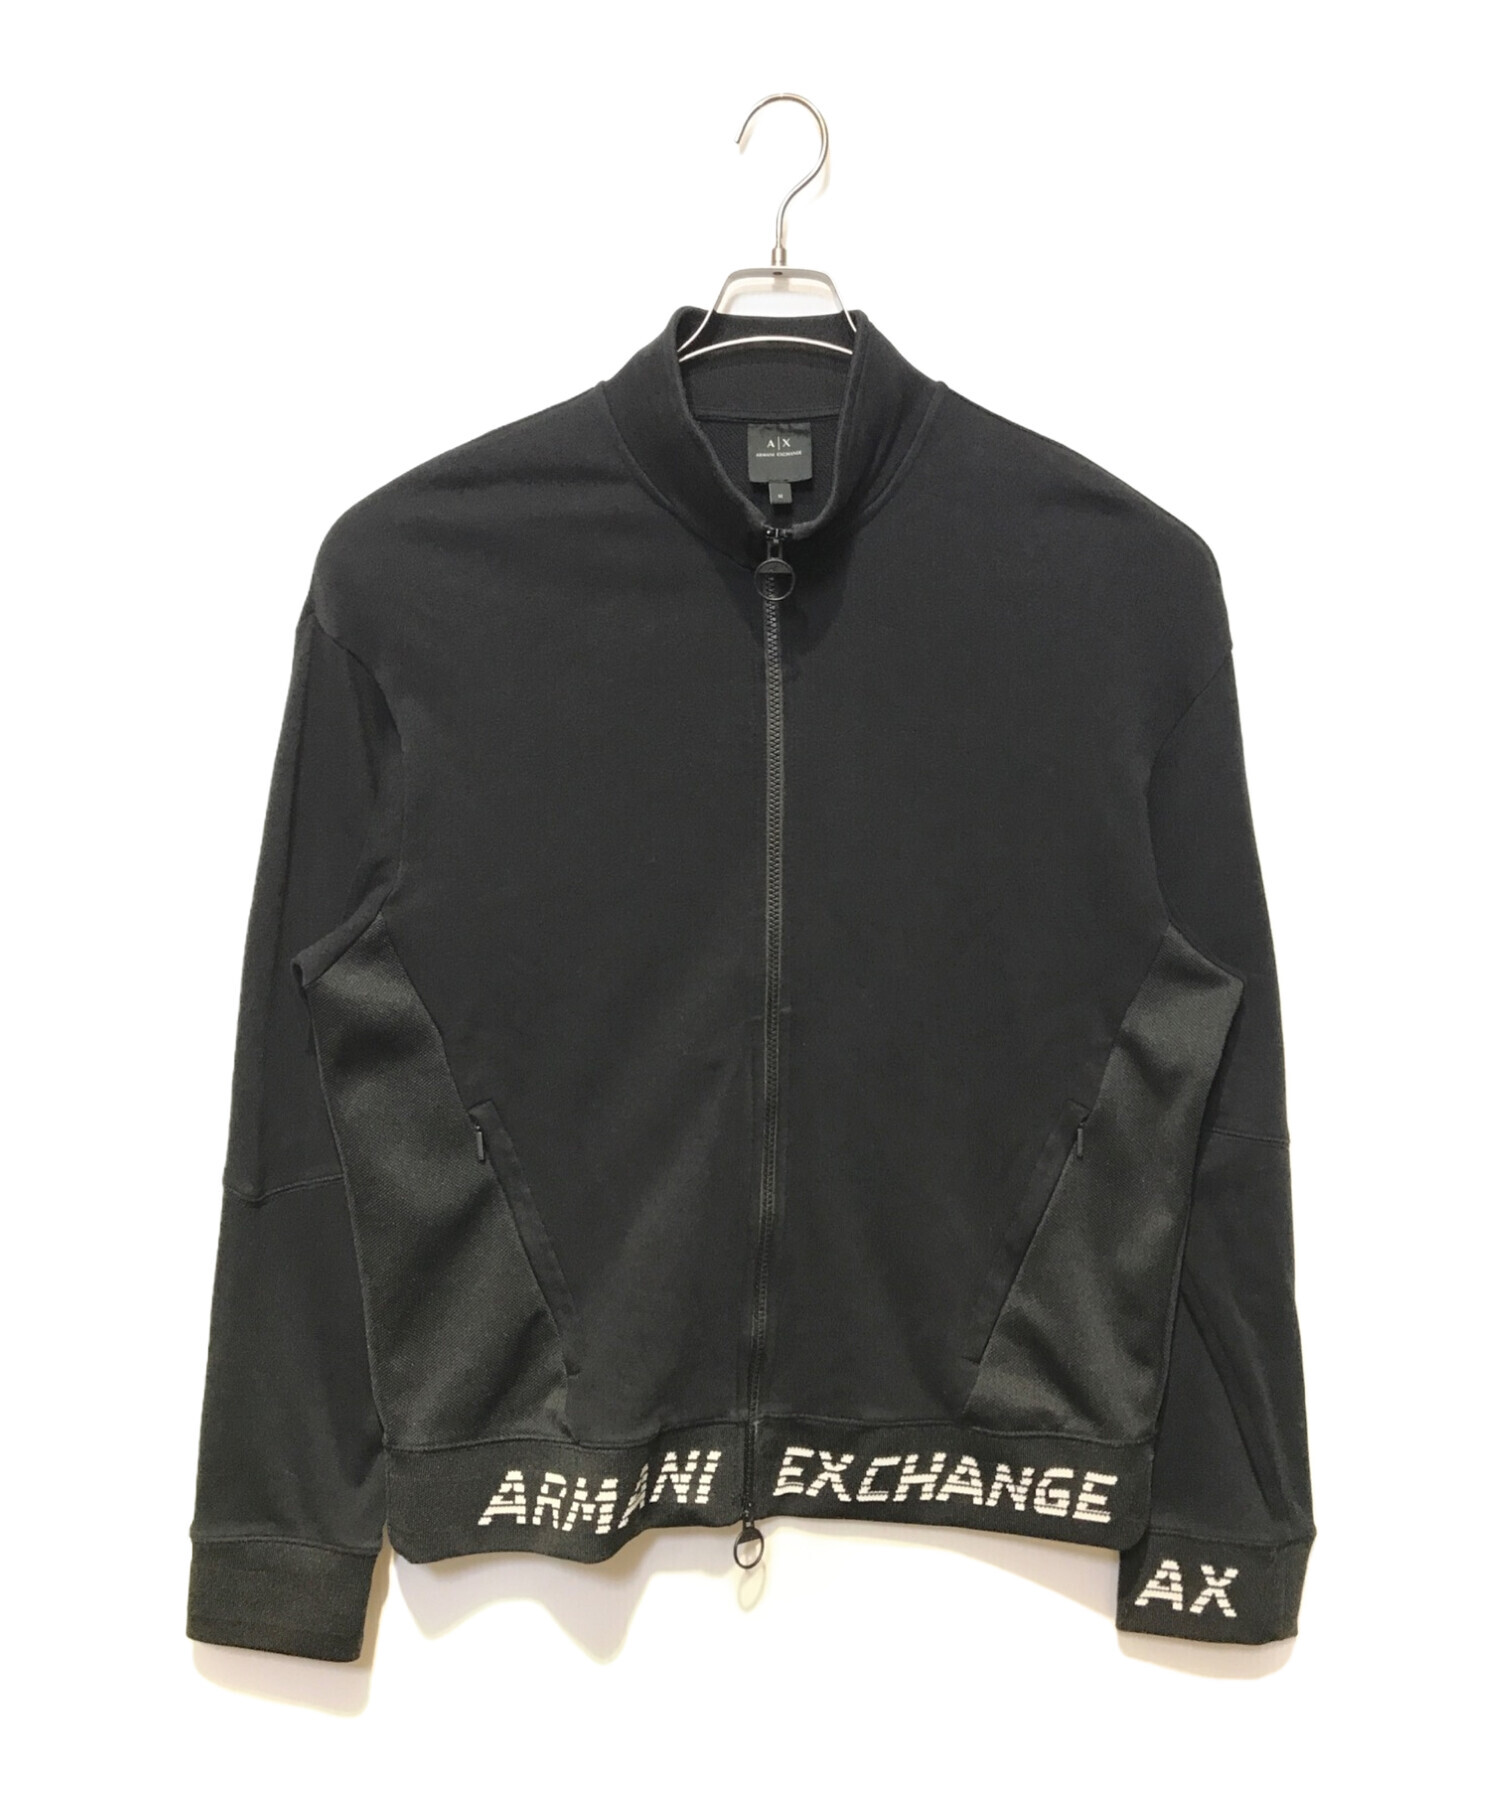 ARMANI EXCHANGE (アルマーニ エクスチェンジ) トラックジャケット ブラック サイズ:M